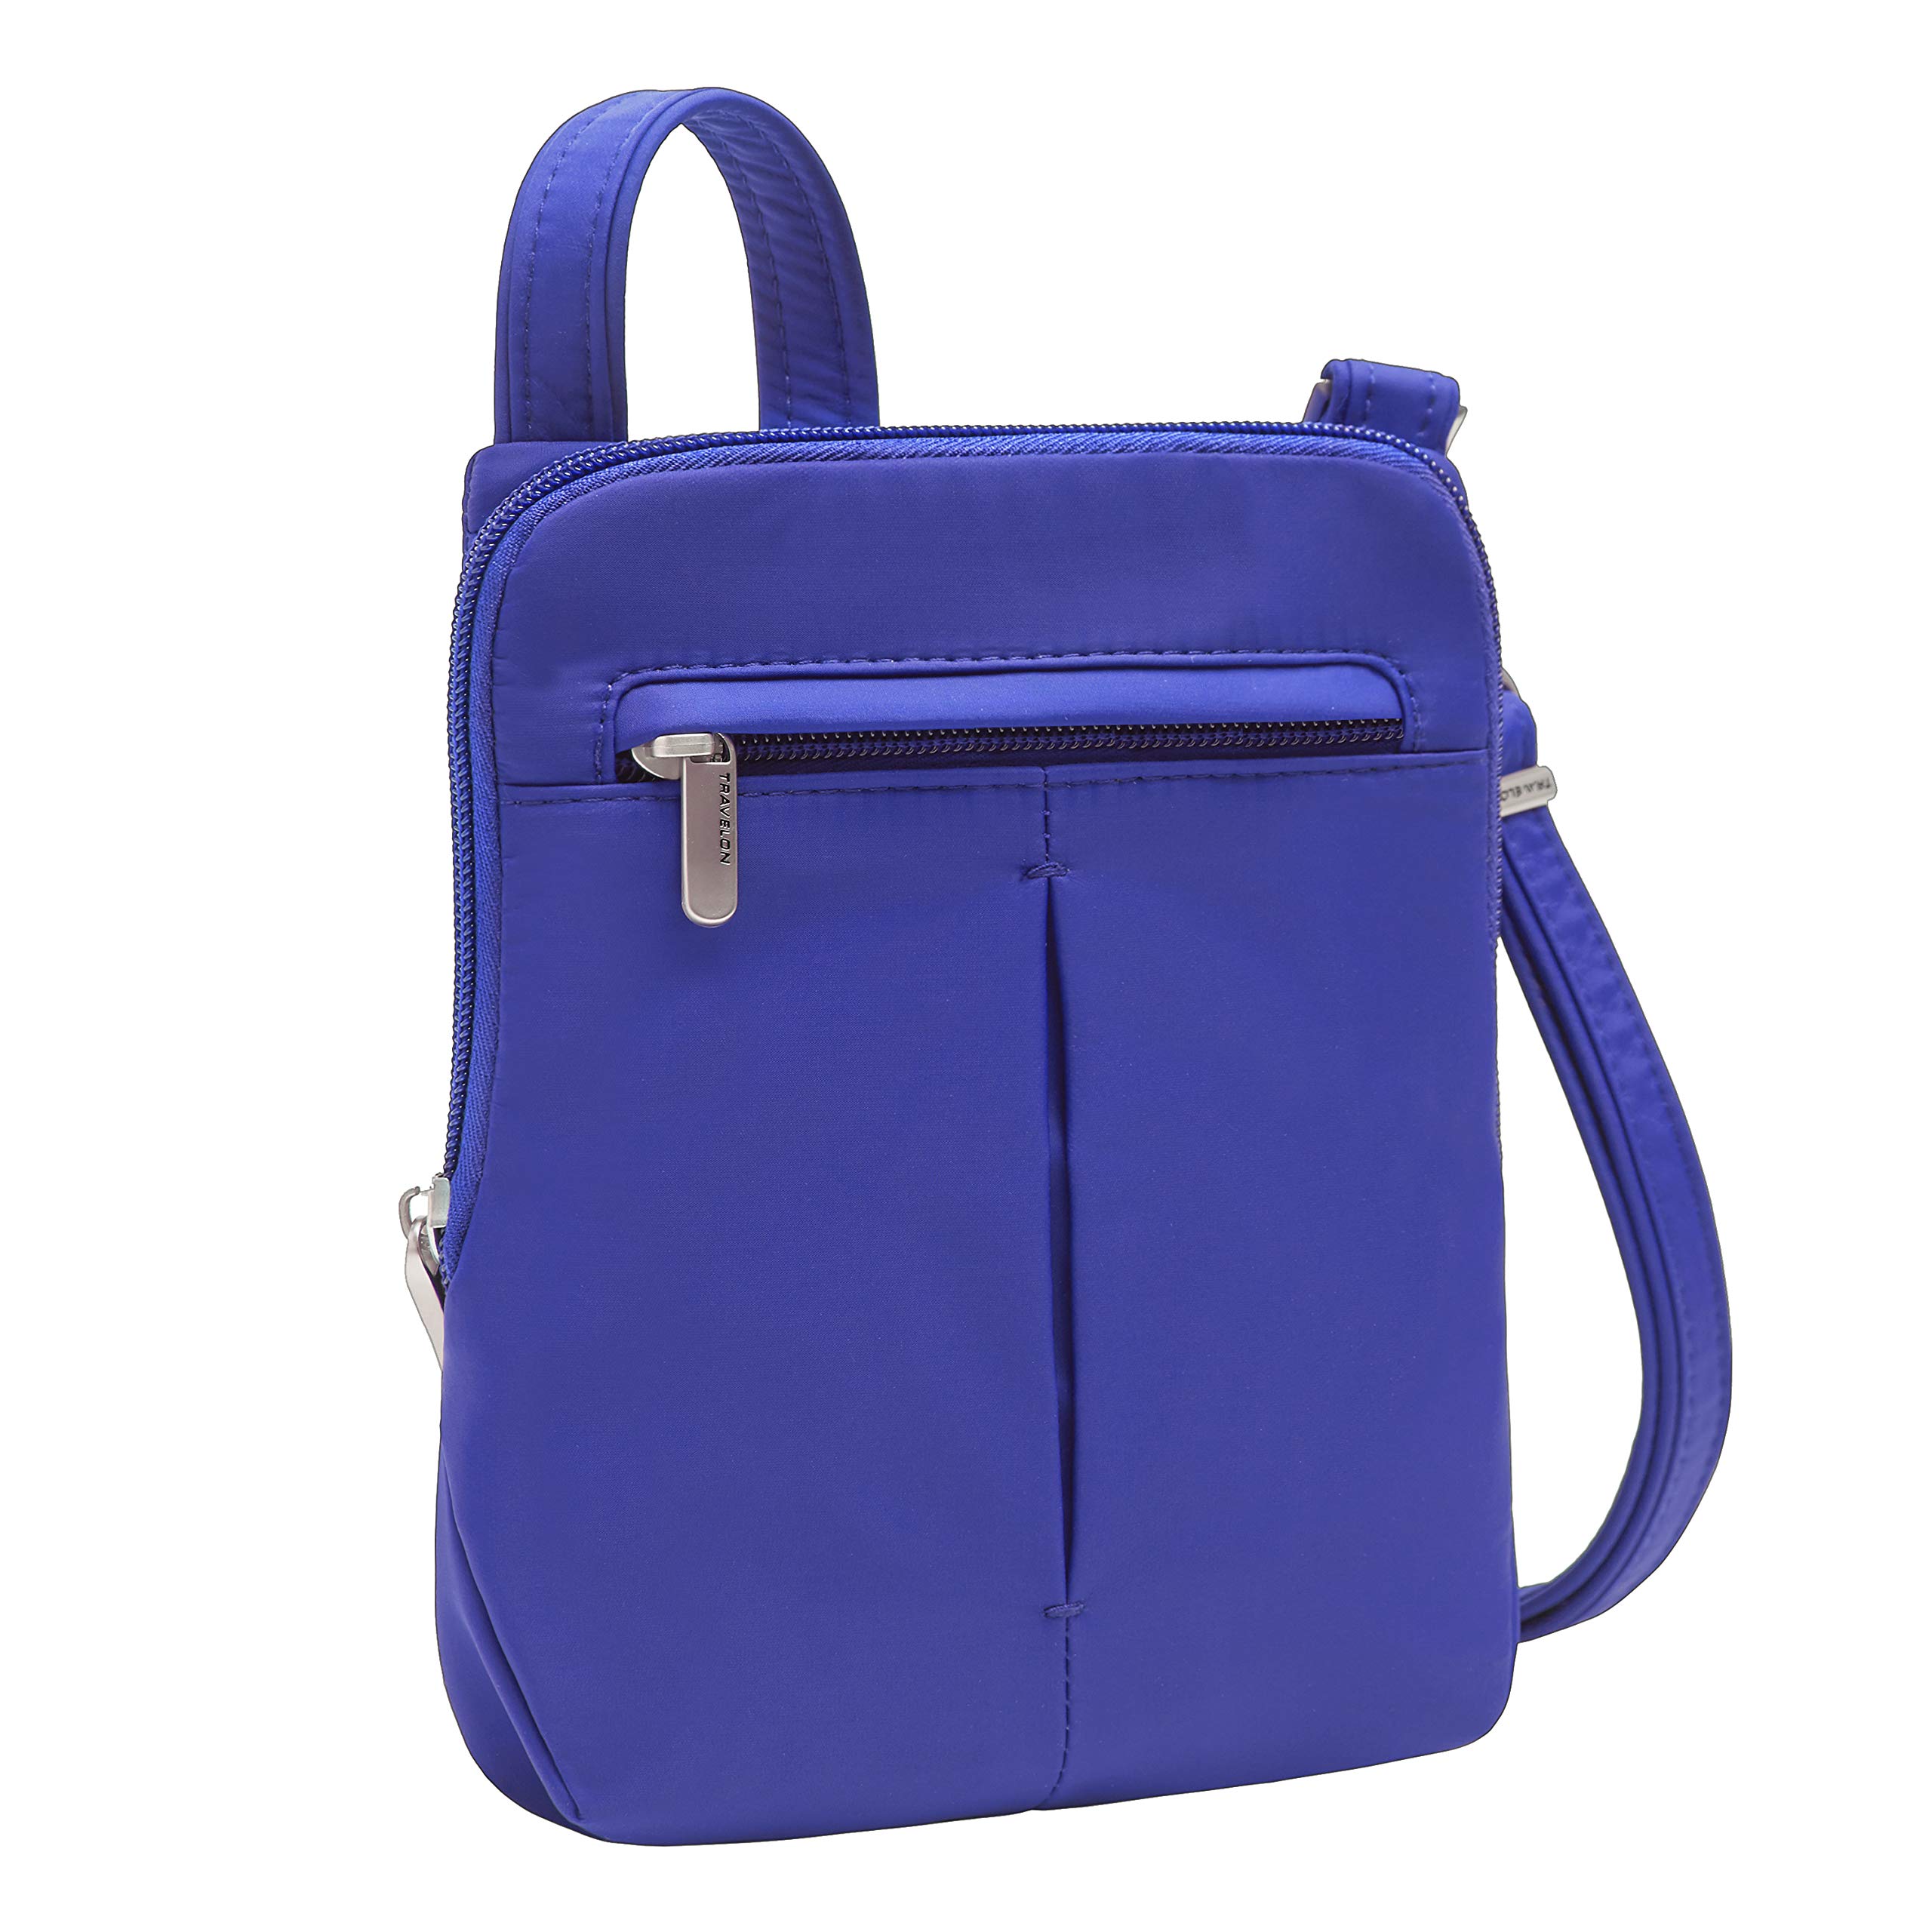 Travelon Anti-Theft Classic Light Mini Crossbody Bag, Lush Blue, One Size